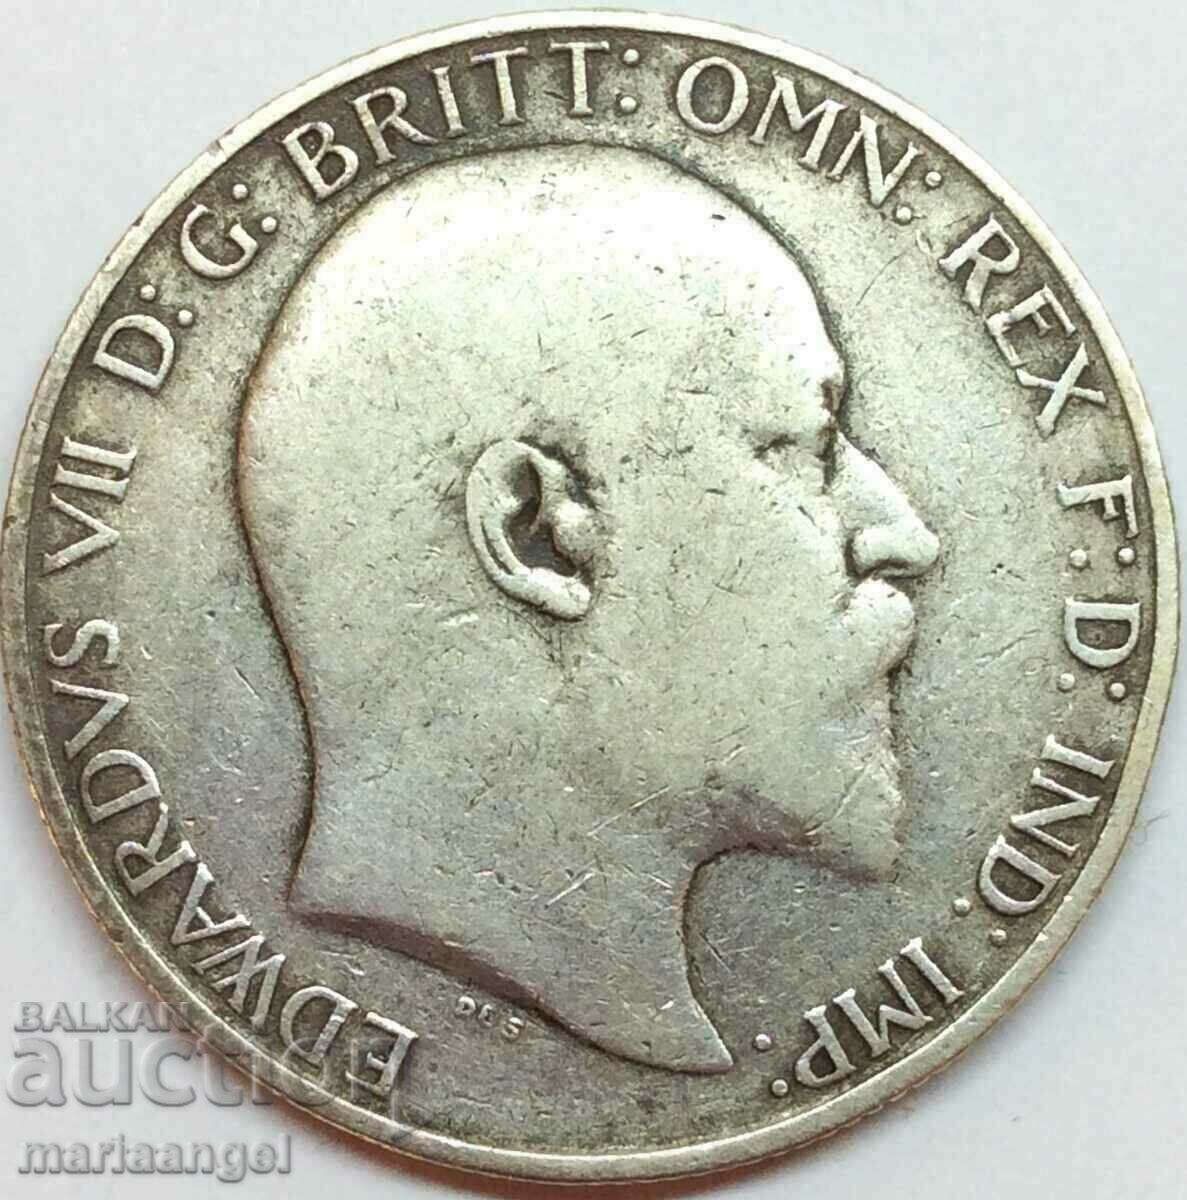 1 Florin 1906 Great Britain 2 Shillings Silver